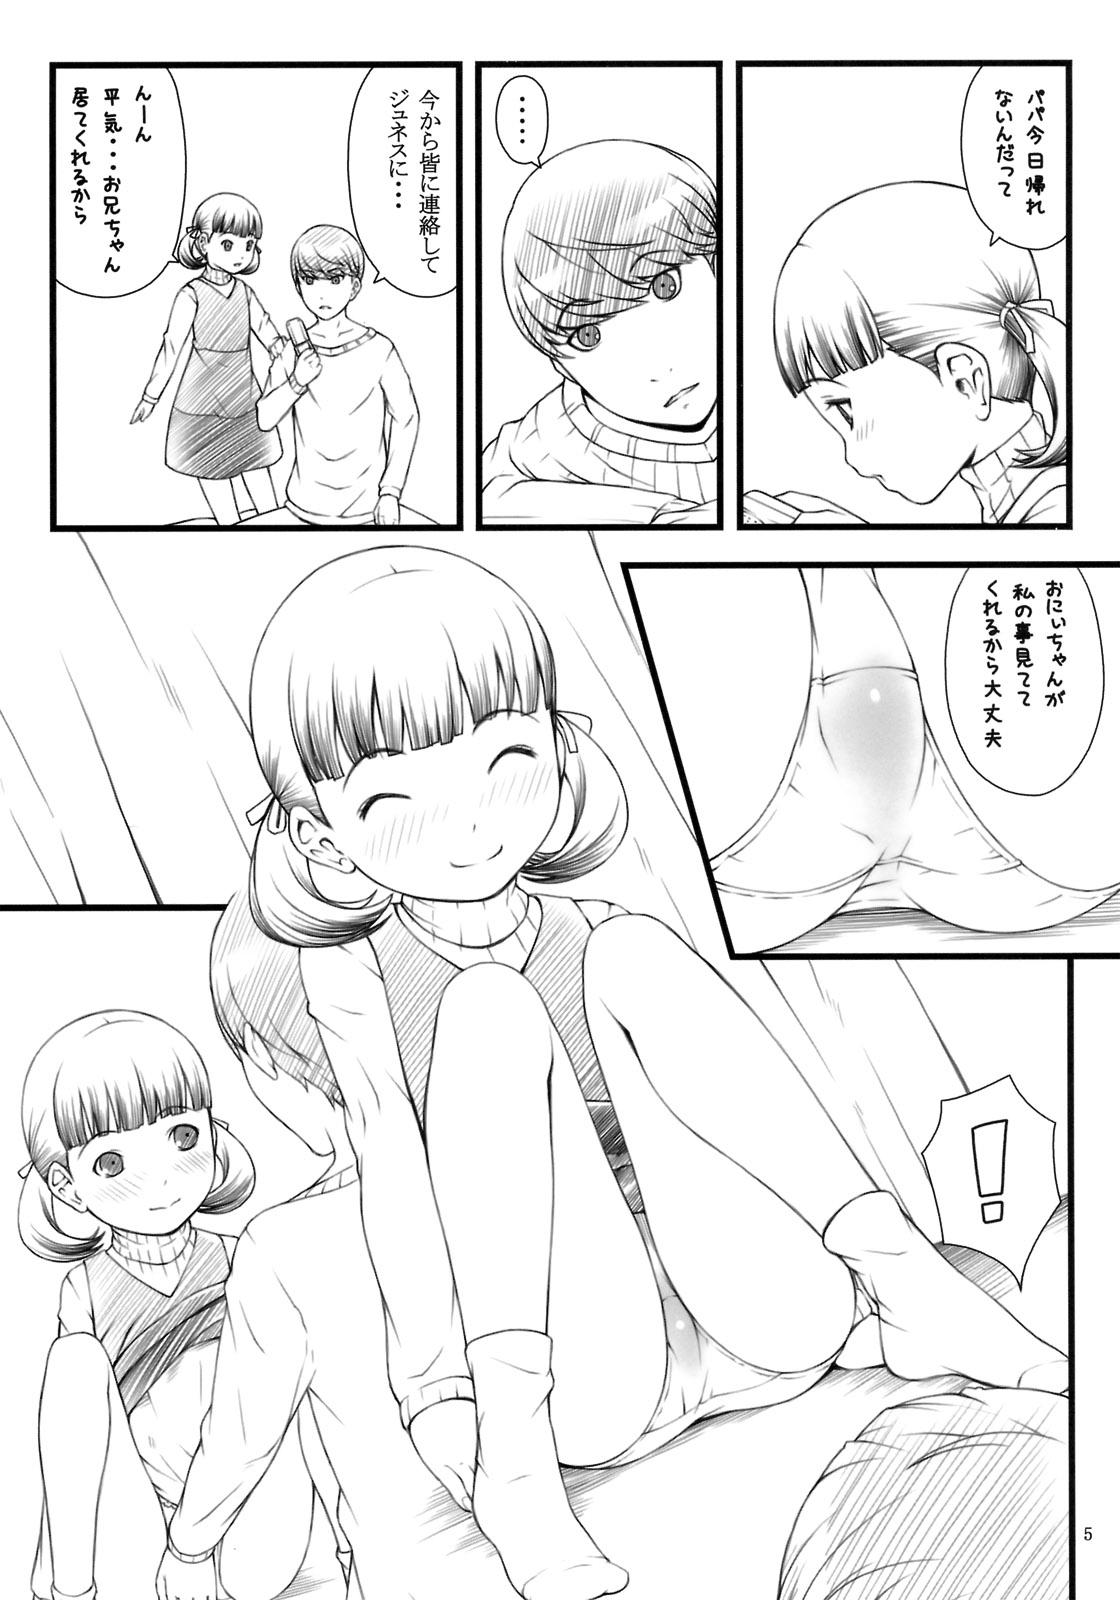 Bwc everyday nanako life! - Persona 4 Peluda - Page 4